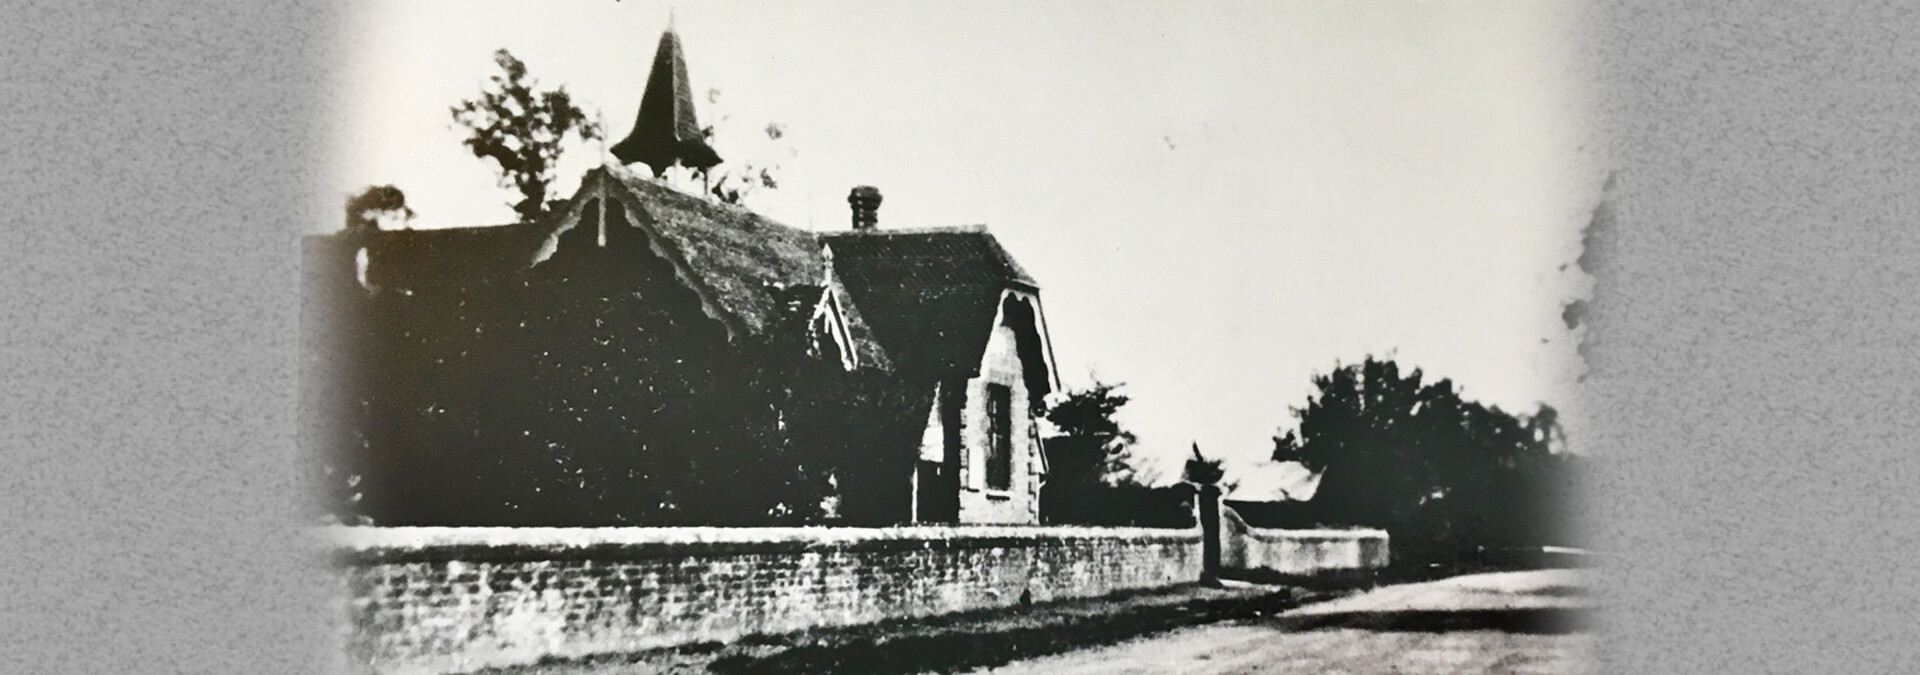 Plaistow School 1944